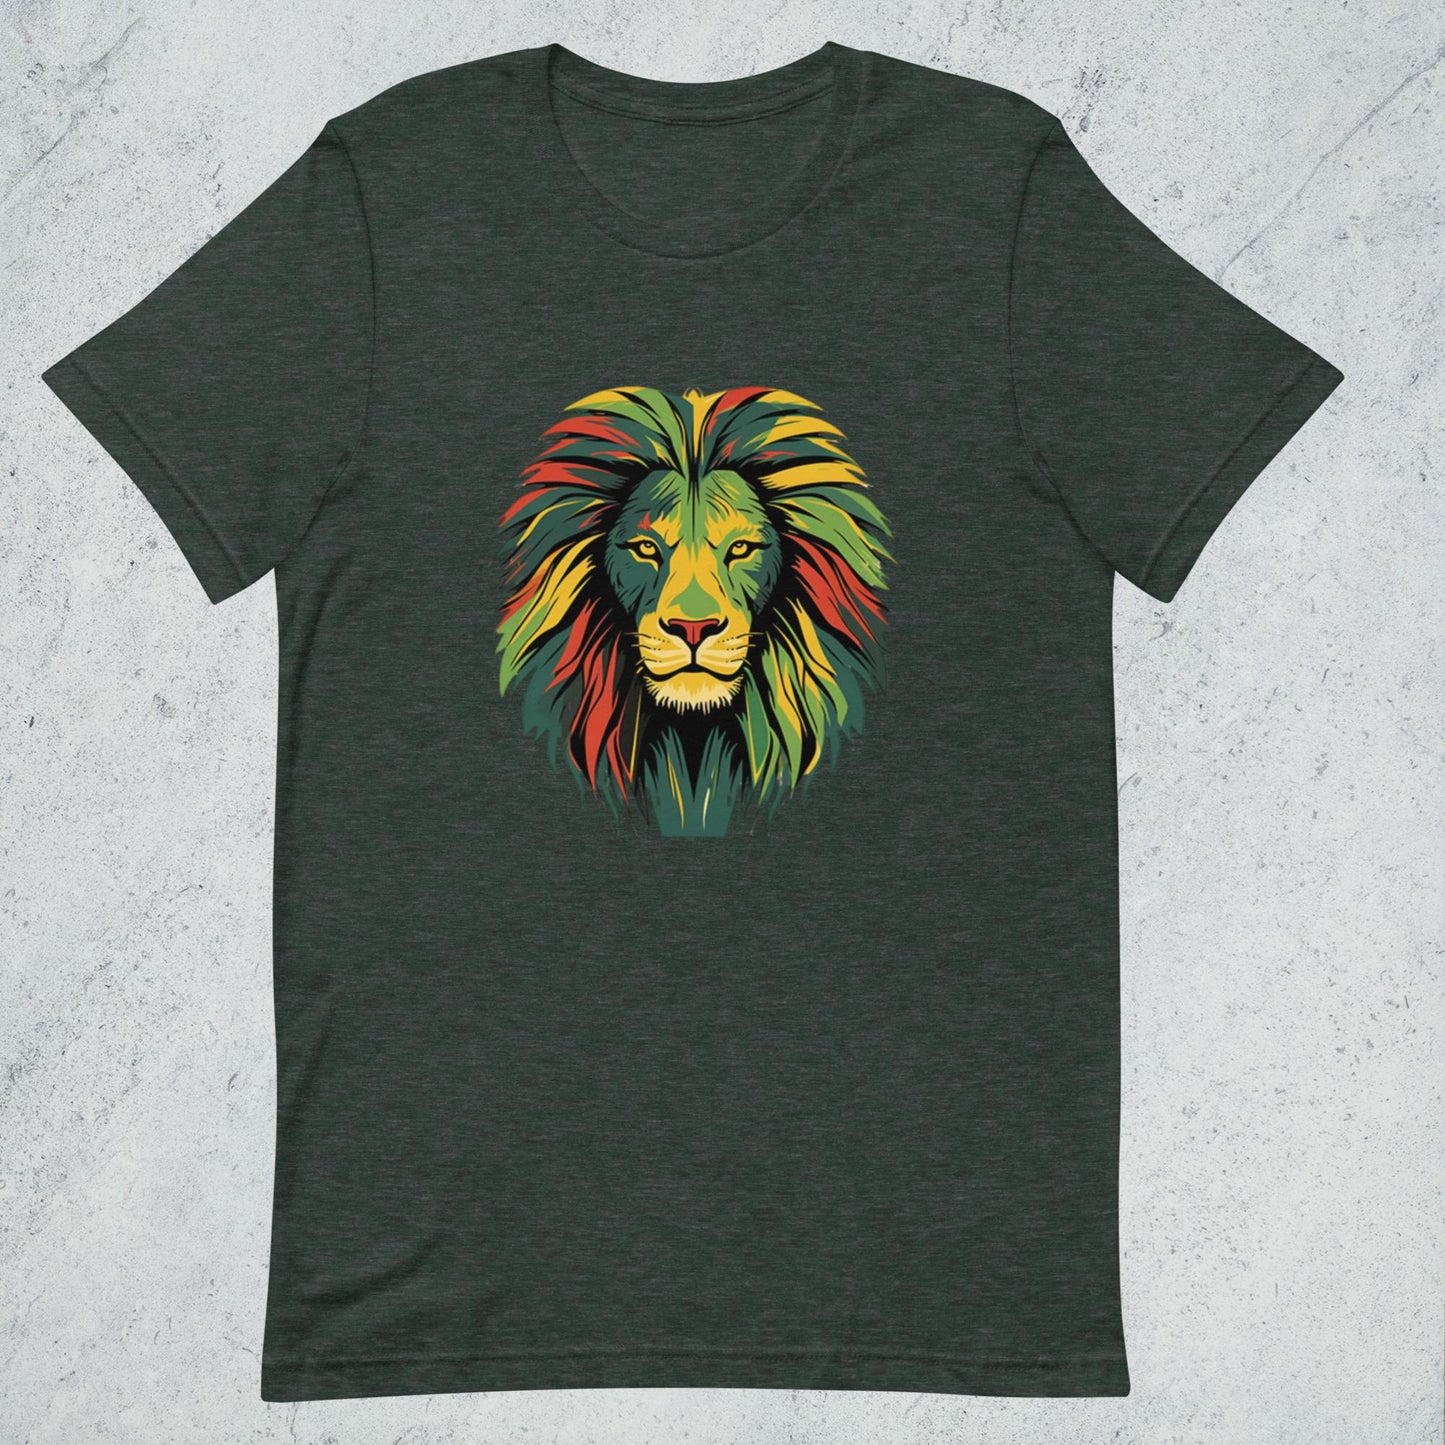 'THEE LION': Unisex t-shirt